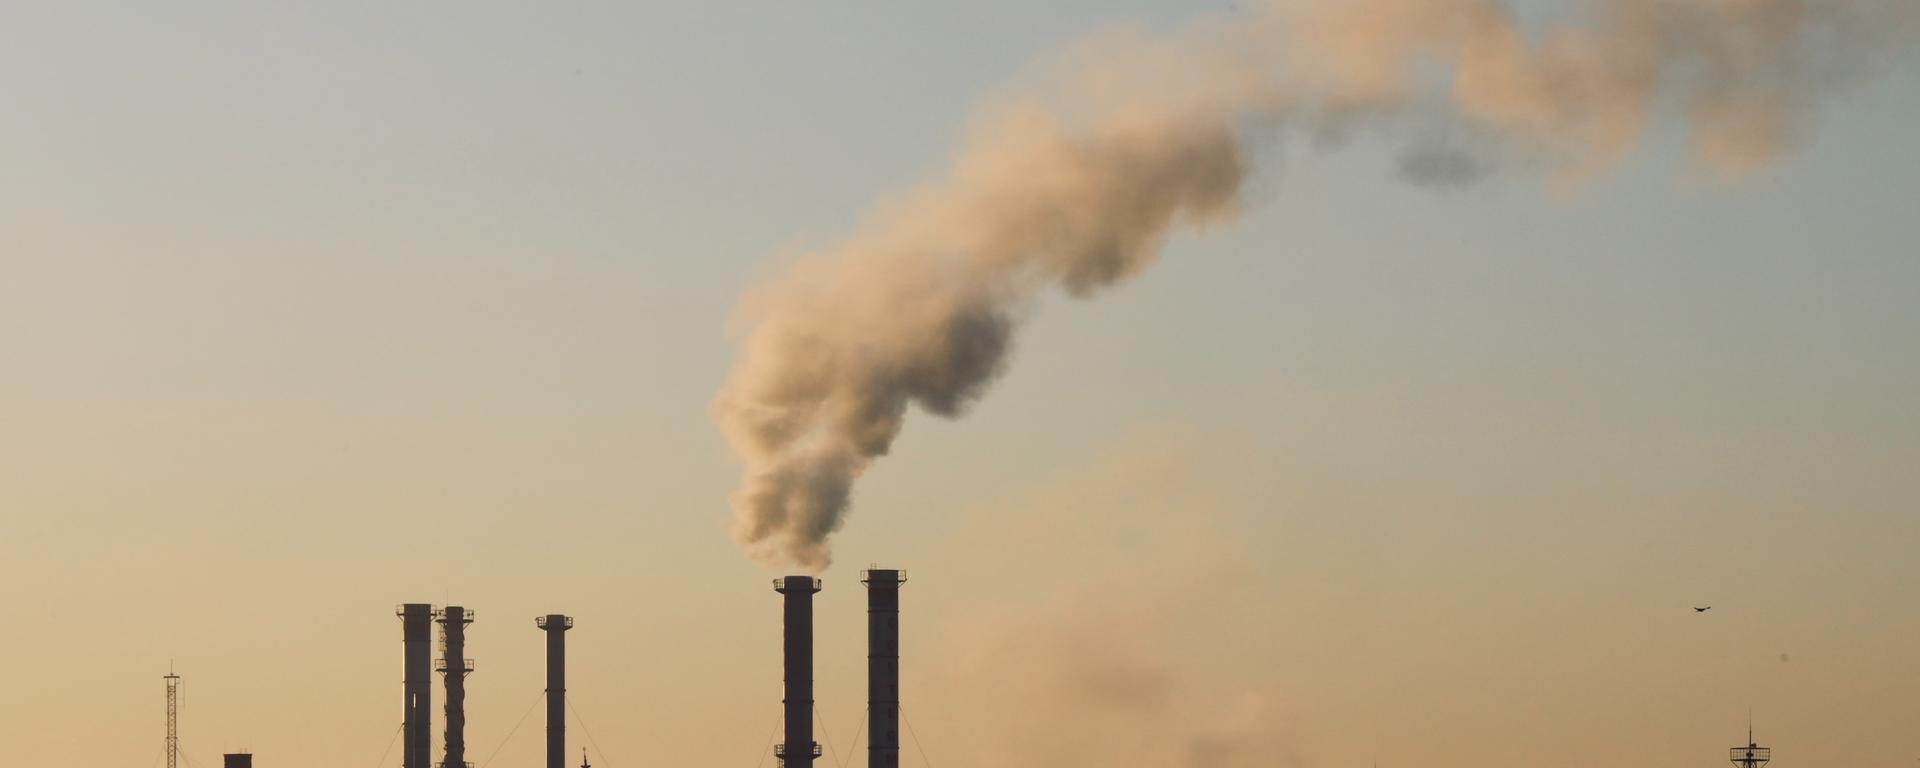 factory carbon dioxide